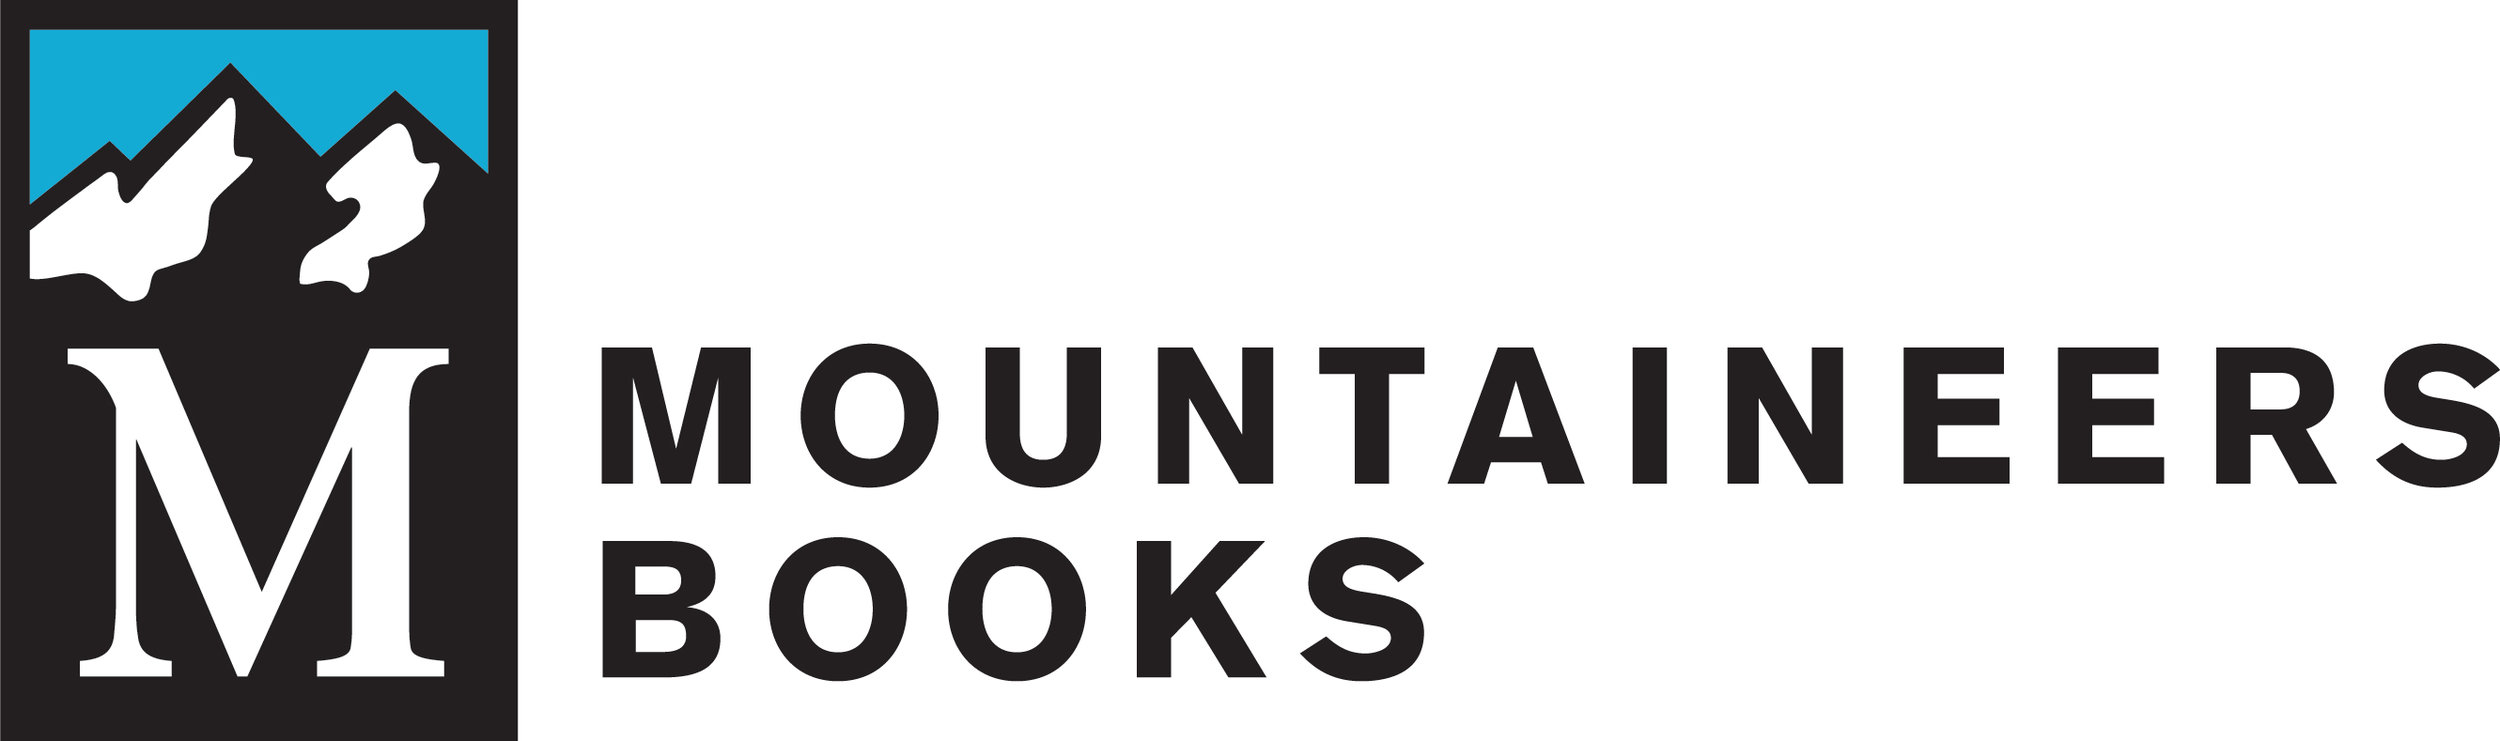 MountaineersBooks_Logo_2017_Outline.jpg